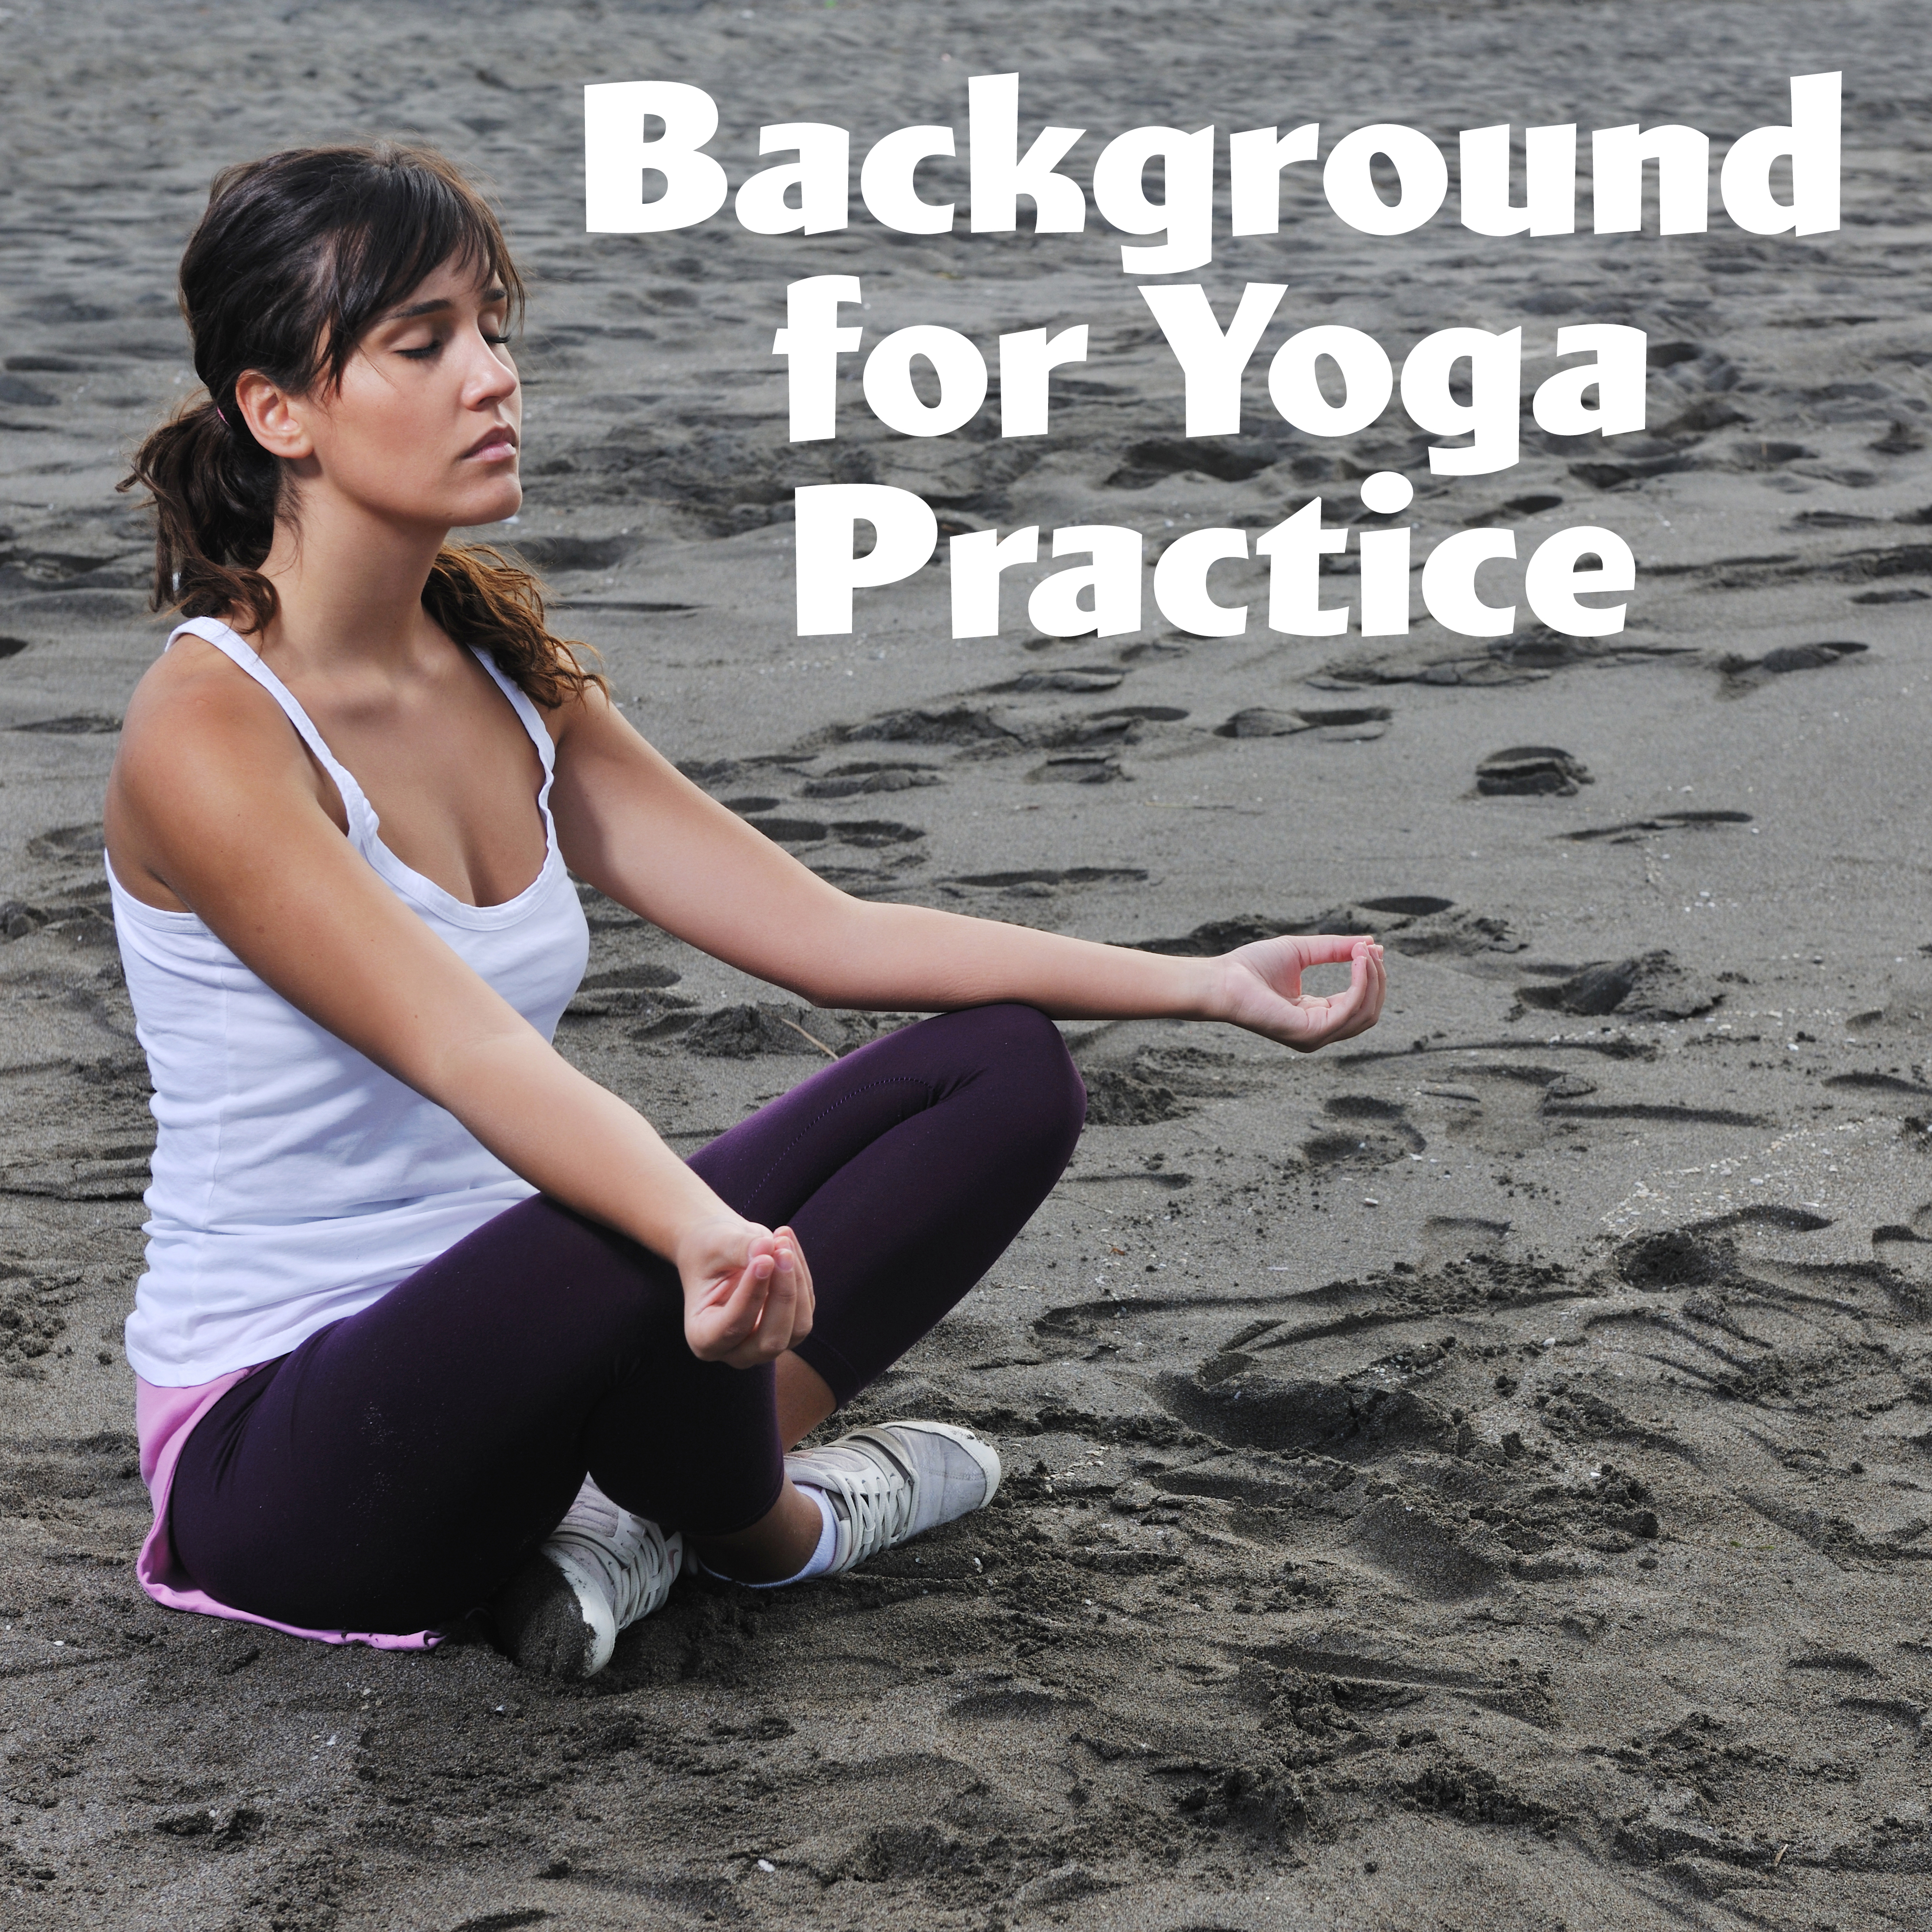 Background for Yoga Practice  – Oriental Music for Yoga, Meditation Music, Most Relaxation Music, Yoga Music, Zen, Czakra, Karma